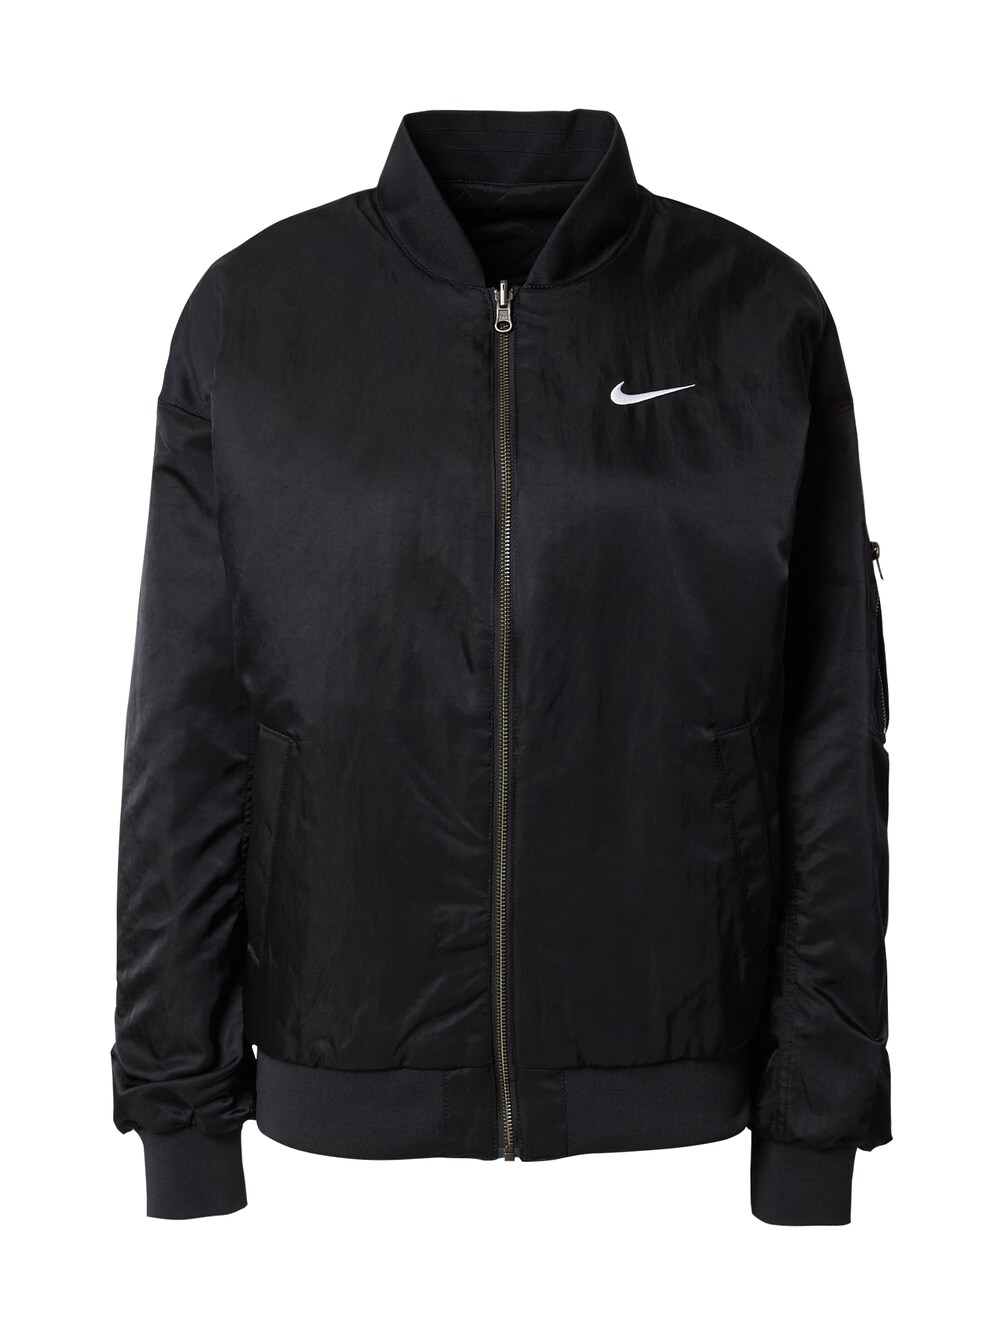 Межсезонная куртка Nike, черный межсезонная куртка nike белый